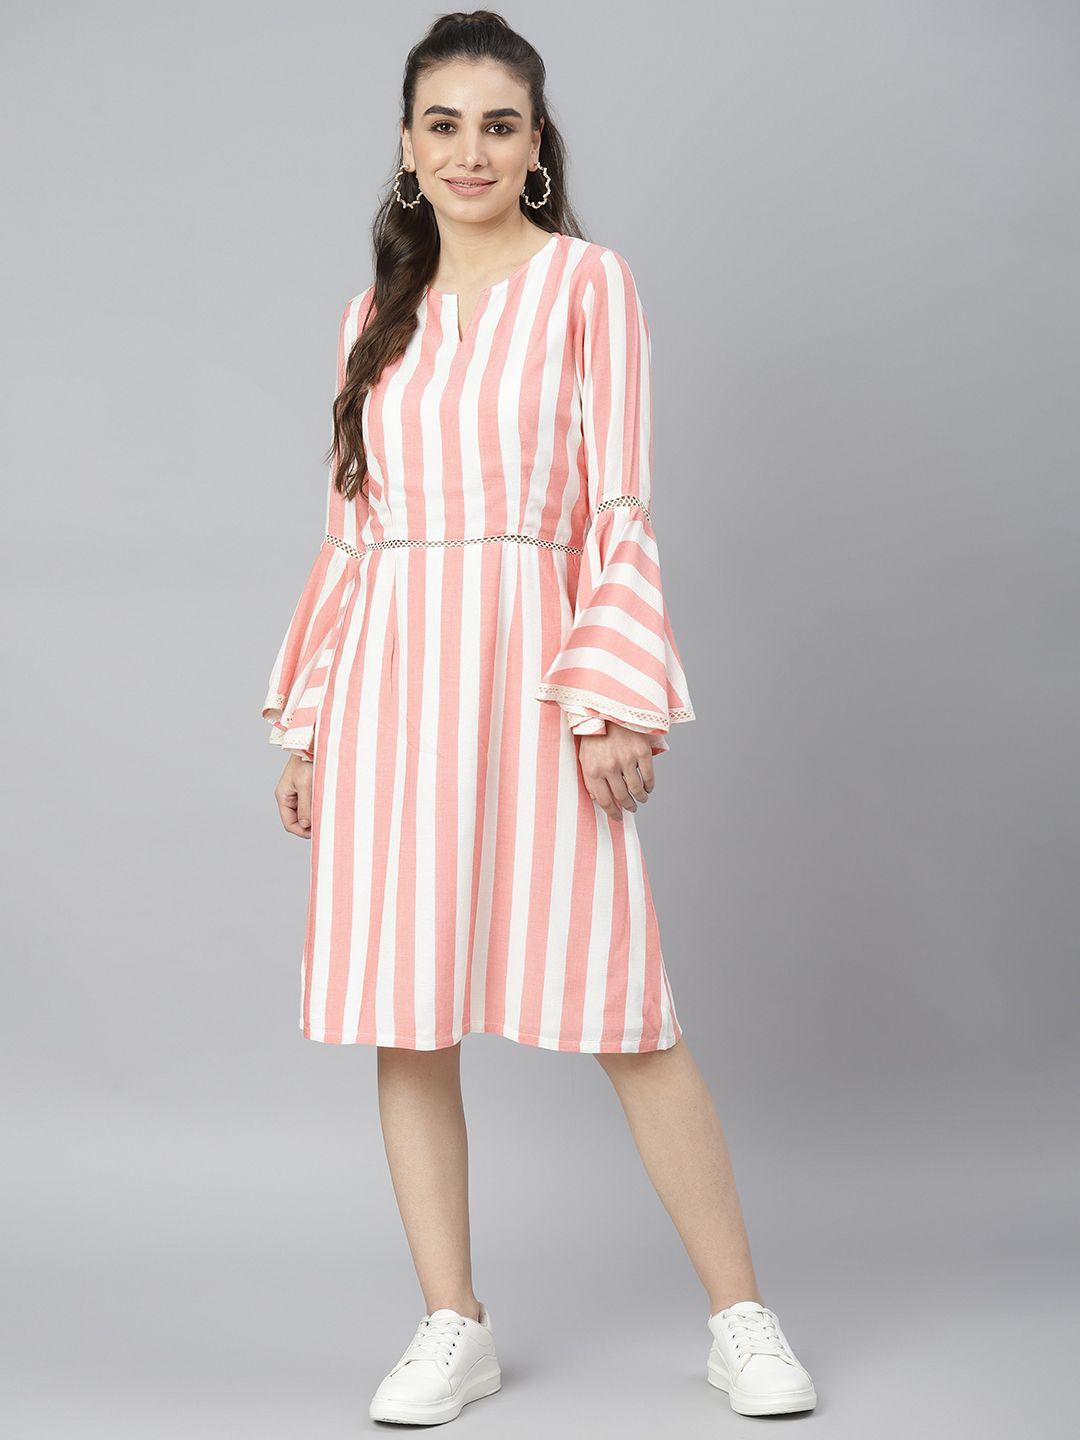 deebaco pink striped bell sleeved a-line dress